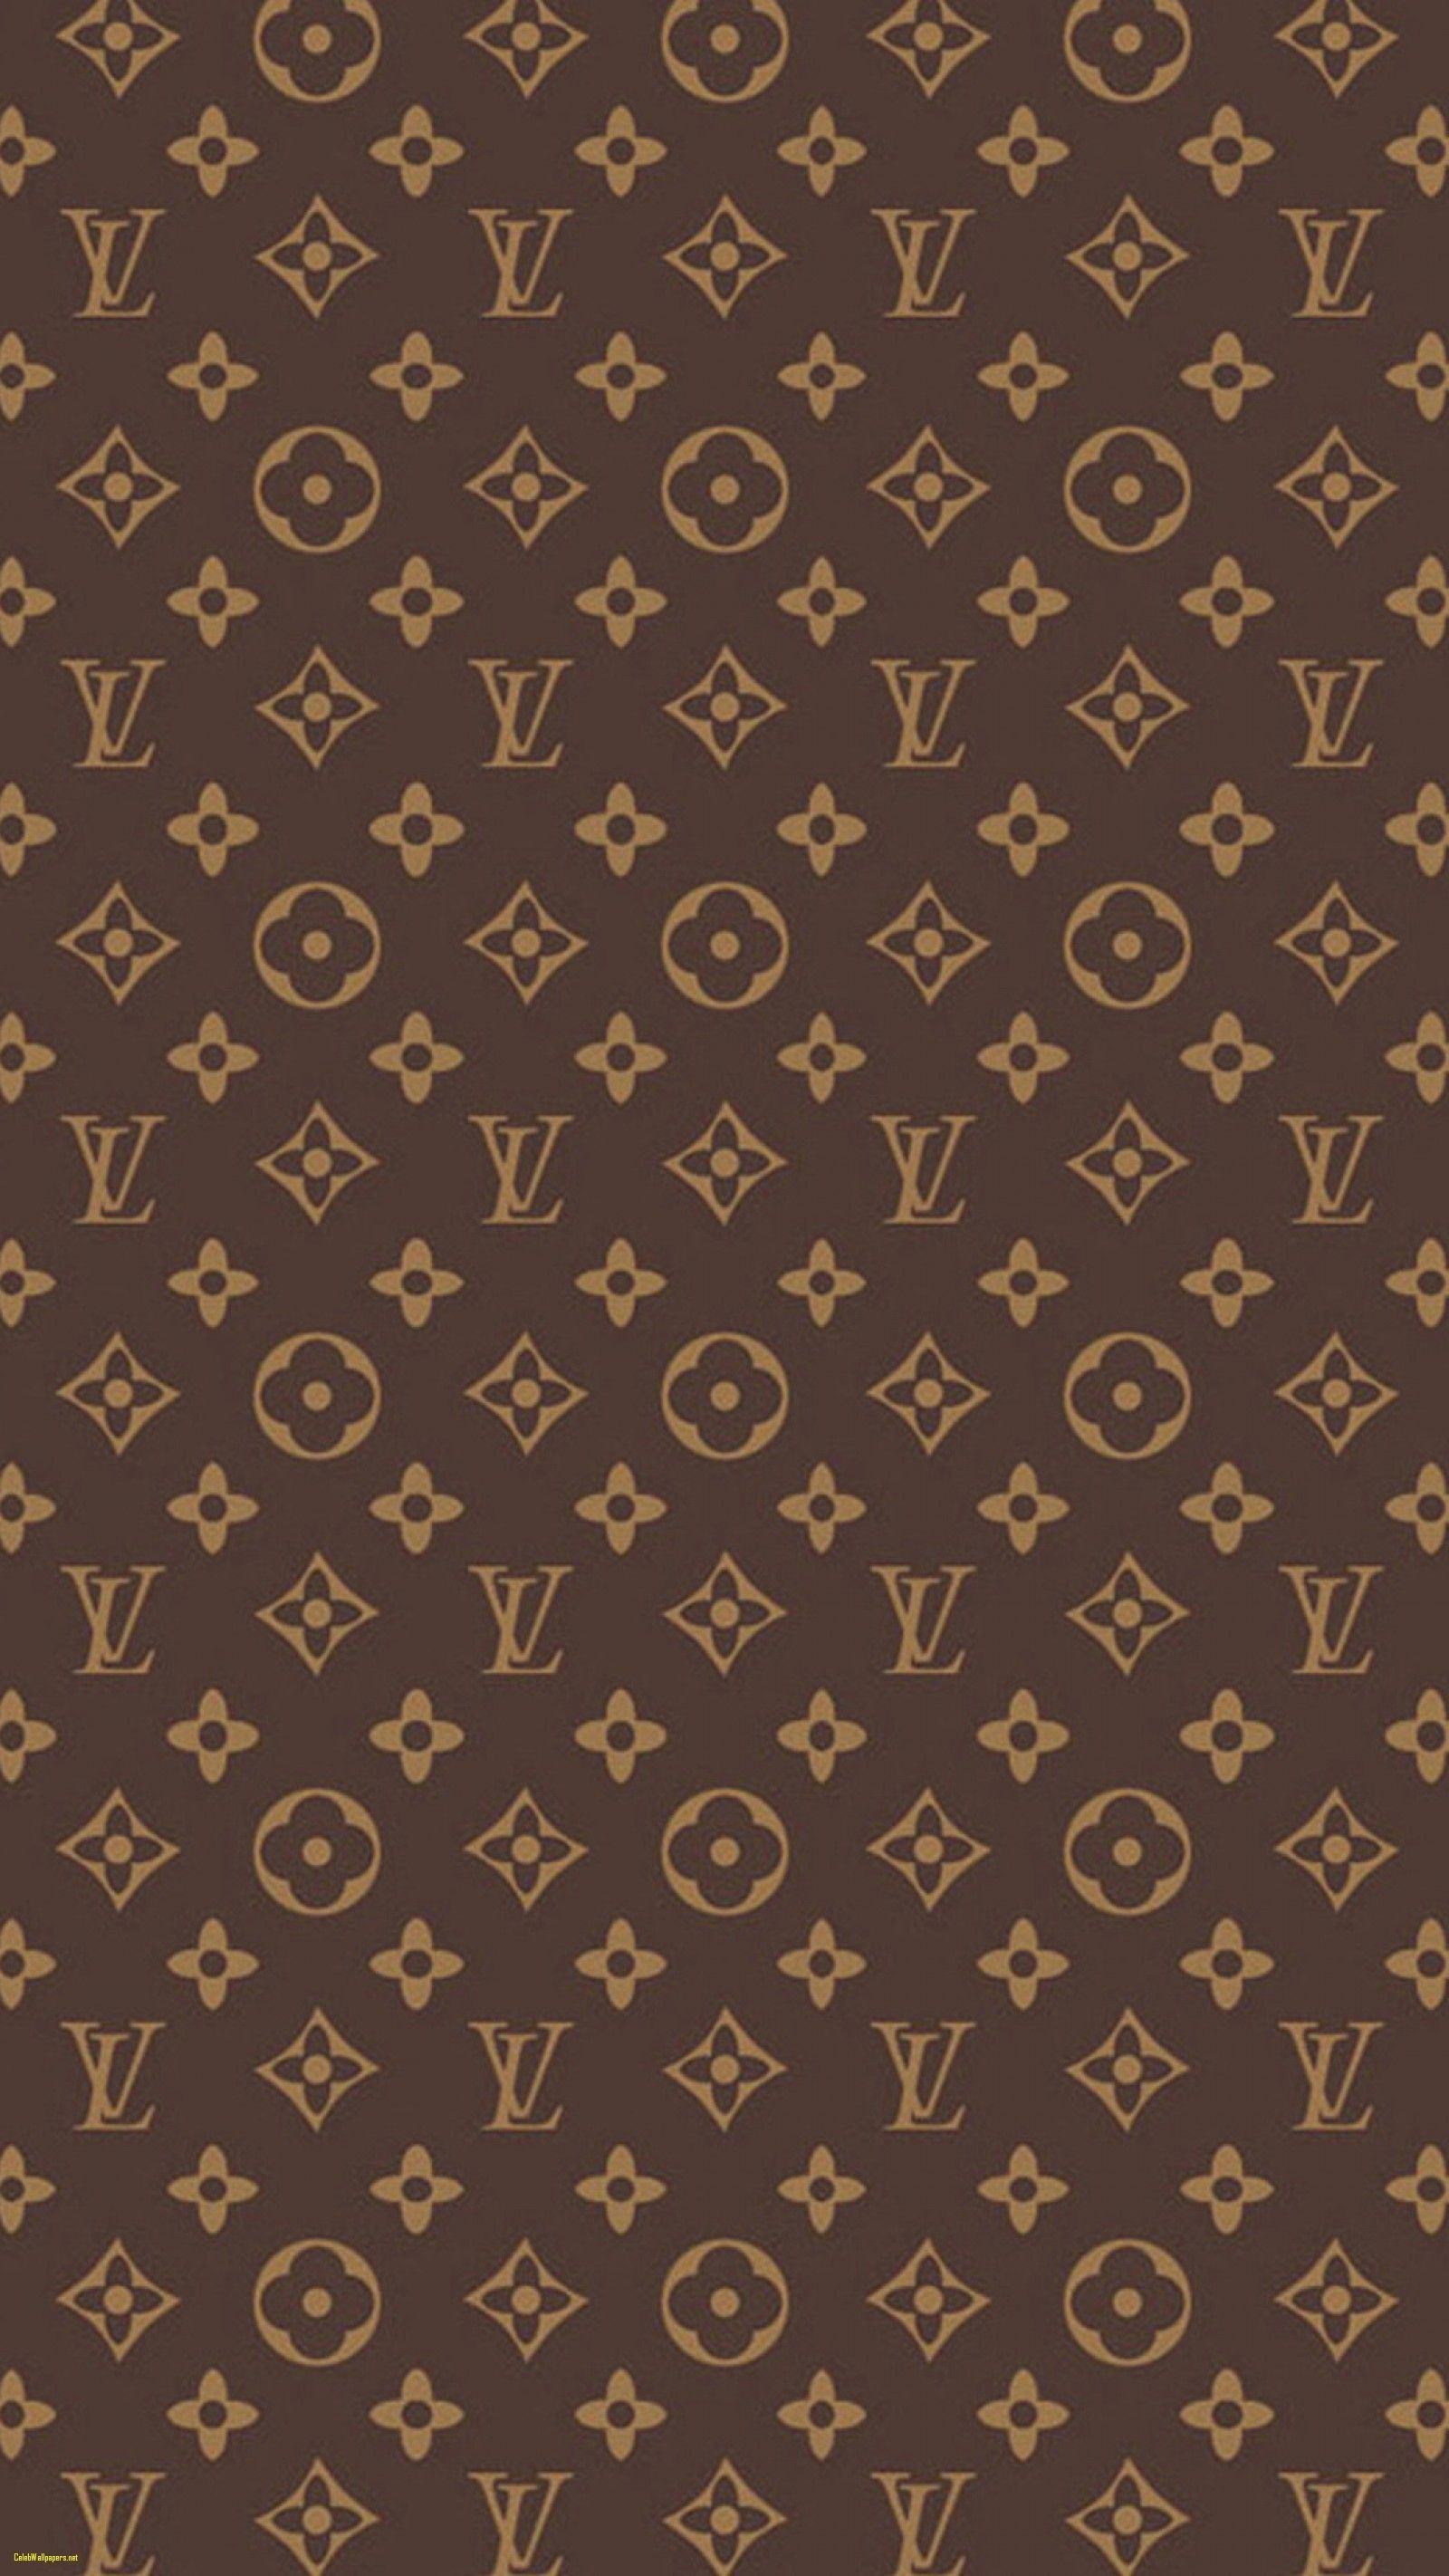 100+] Louis Vuitton Logo Backgrounds